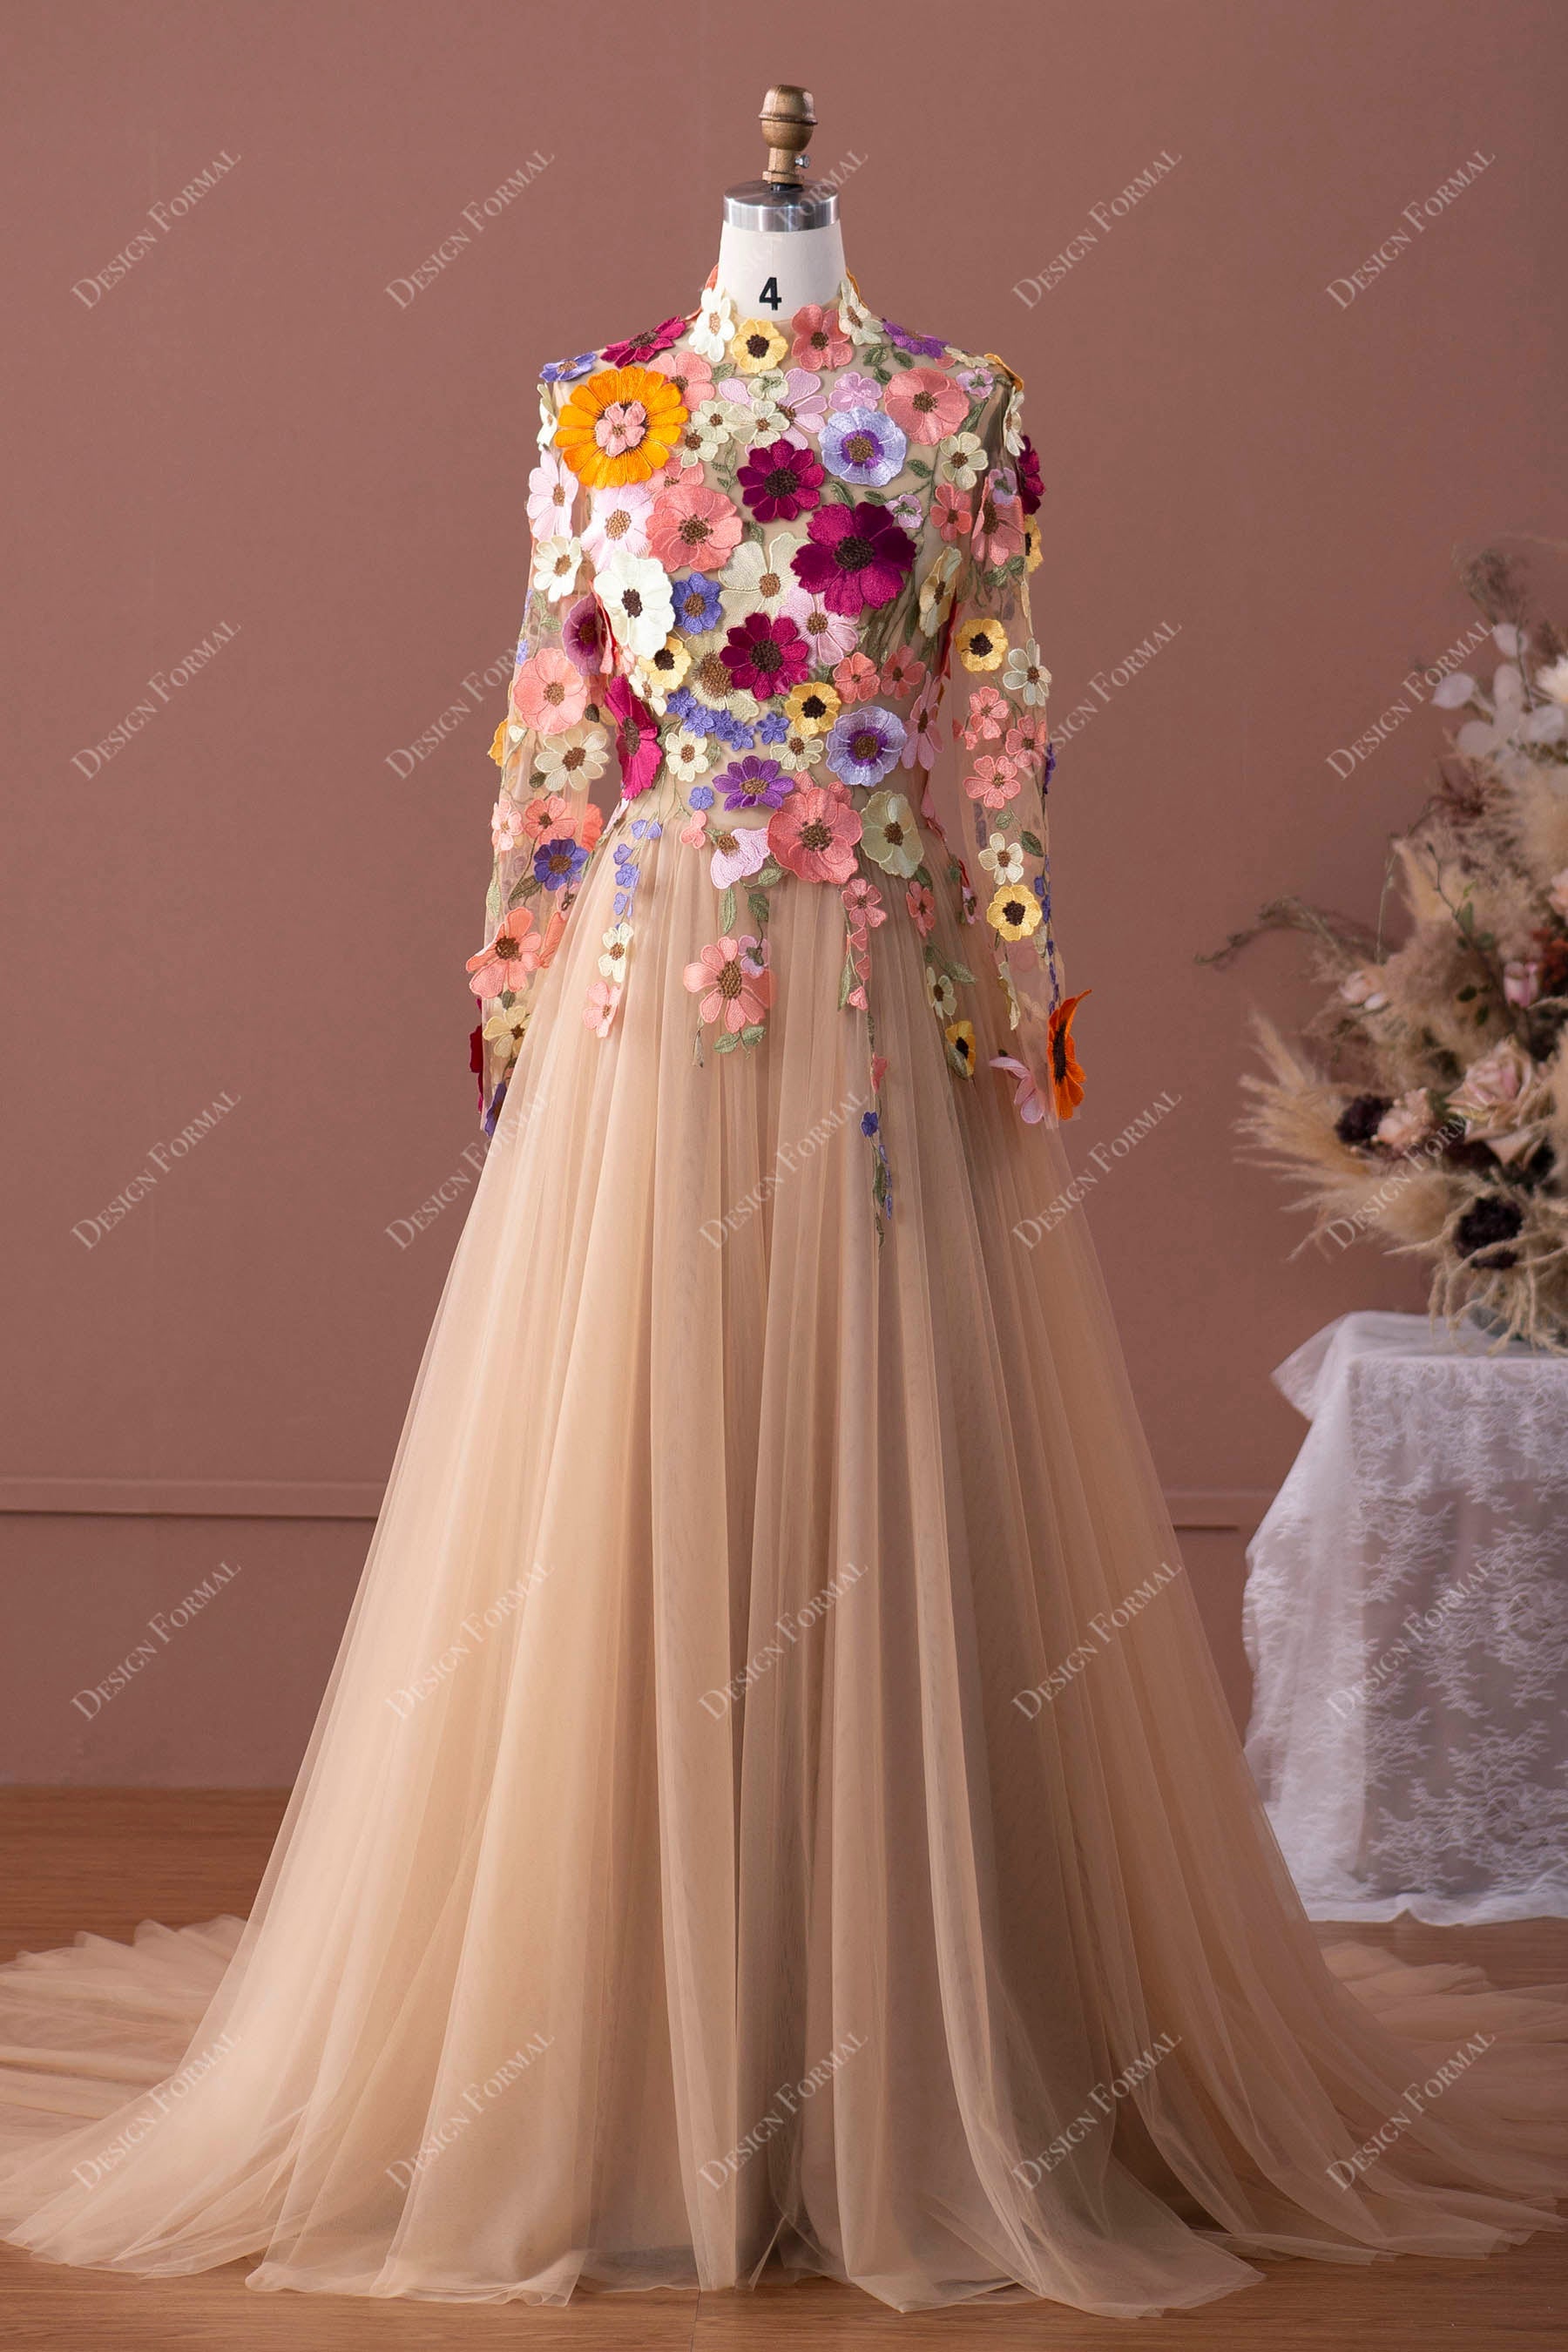 Designer Colorful Wild Flowers Fairytale Sleeved A-line Wedding Dress